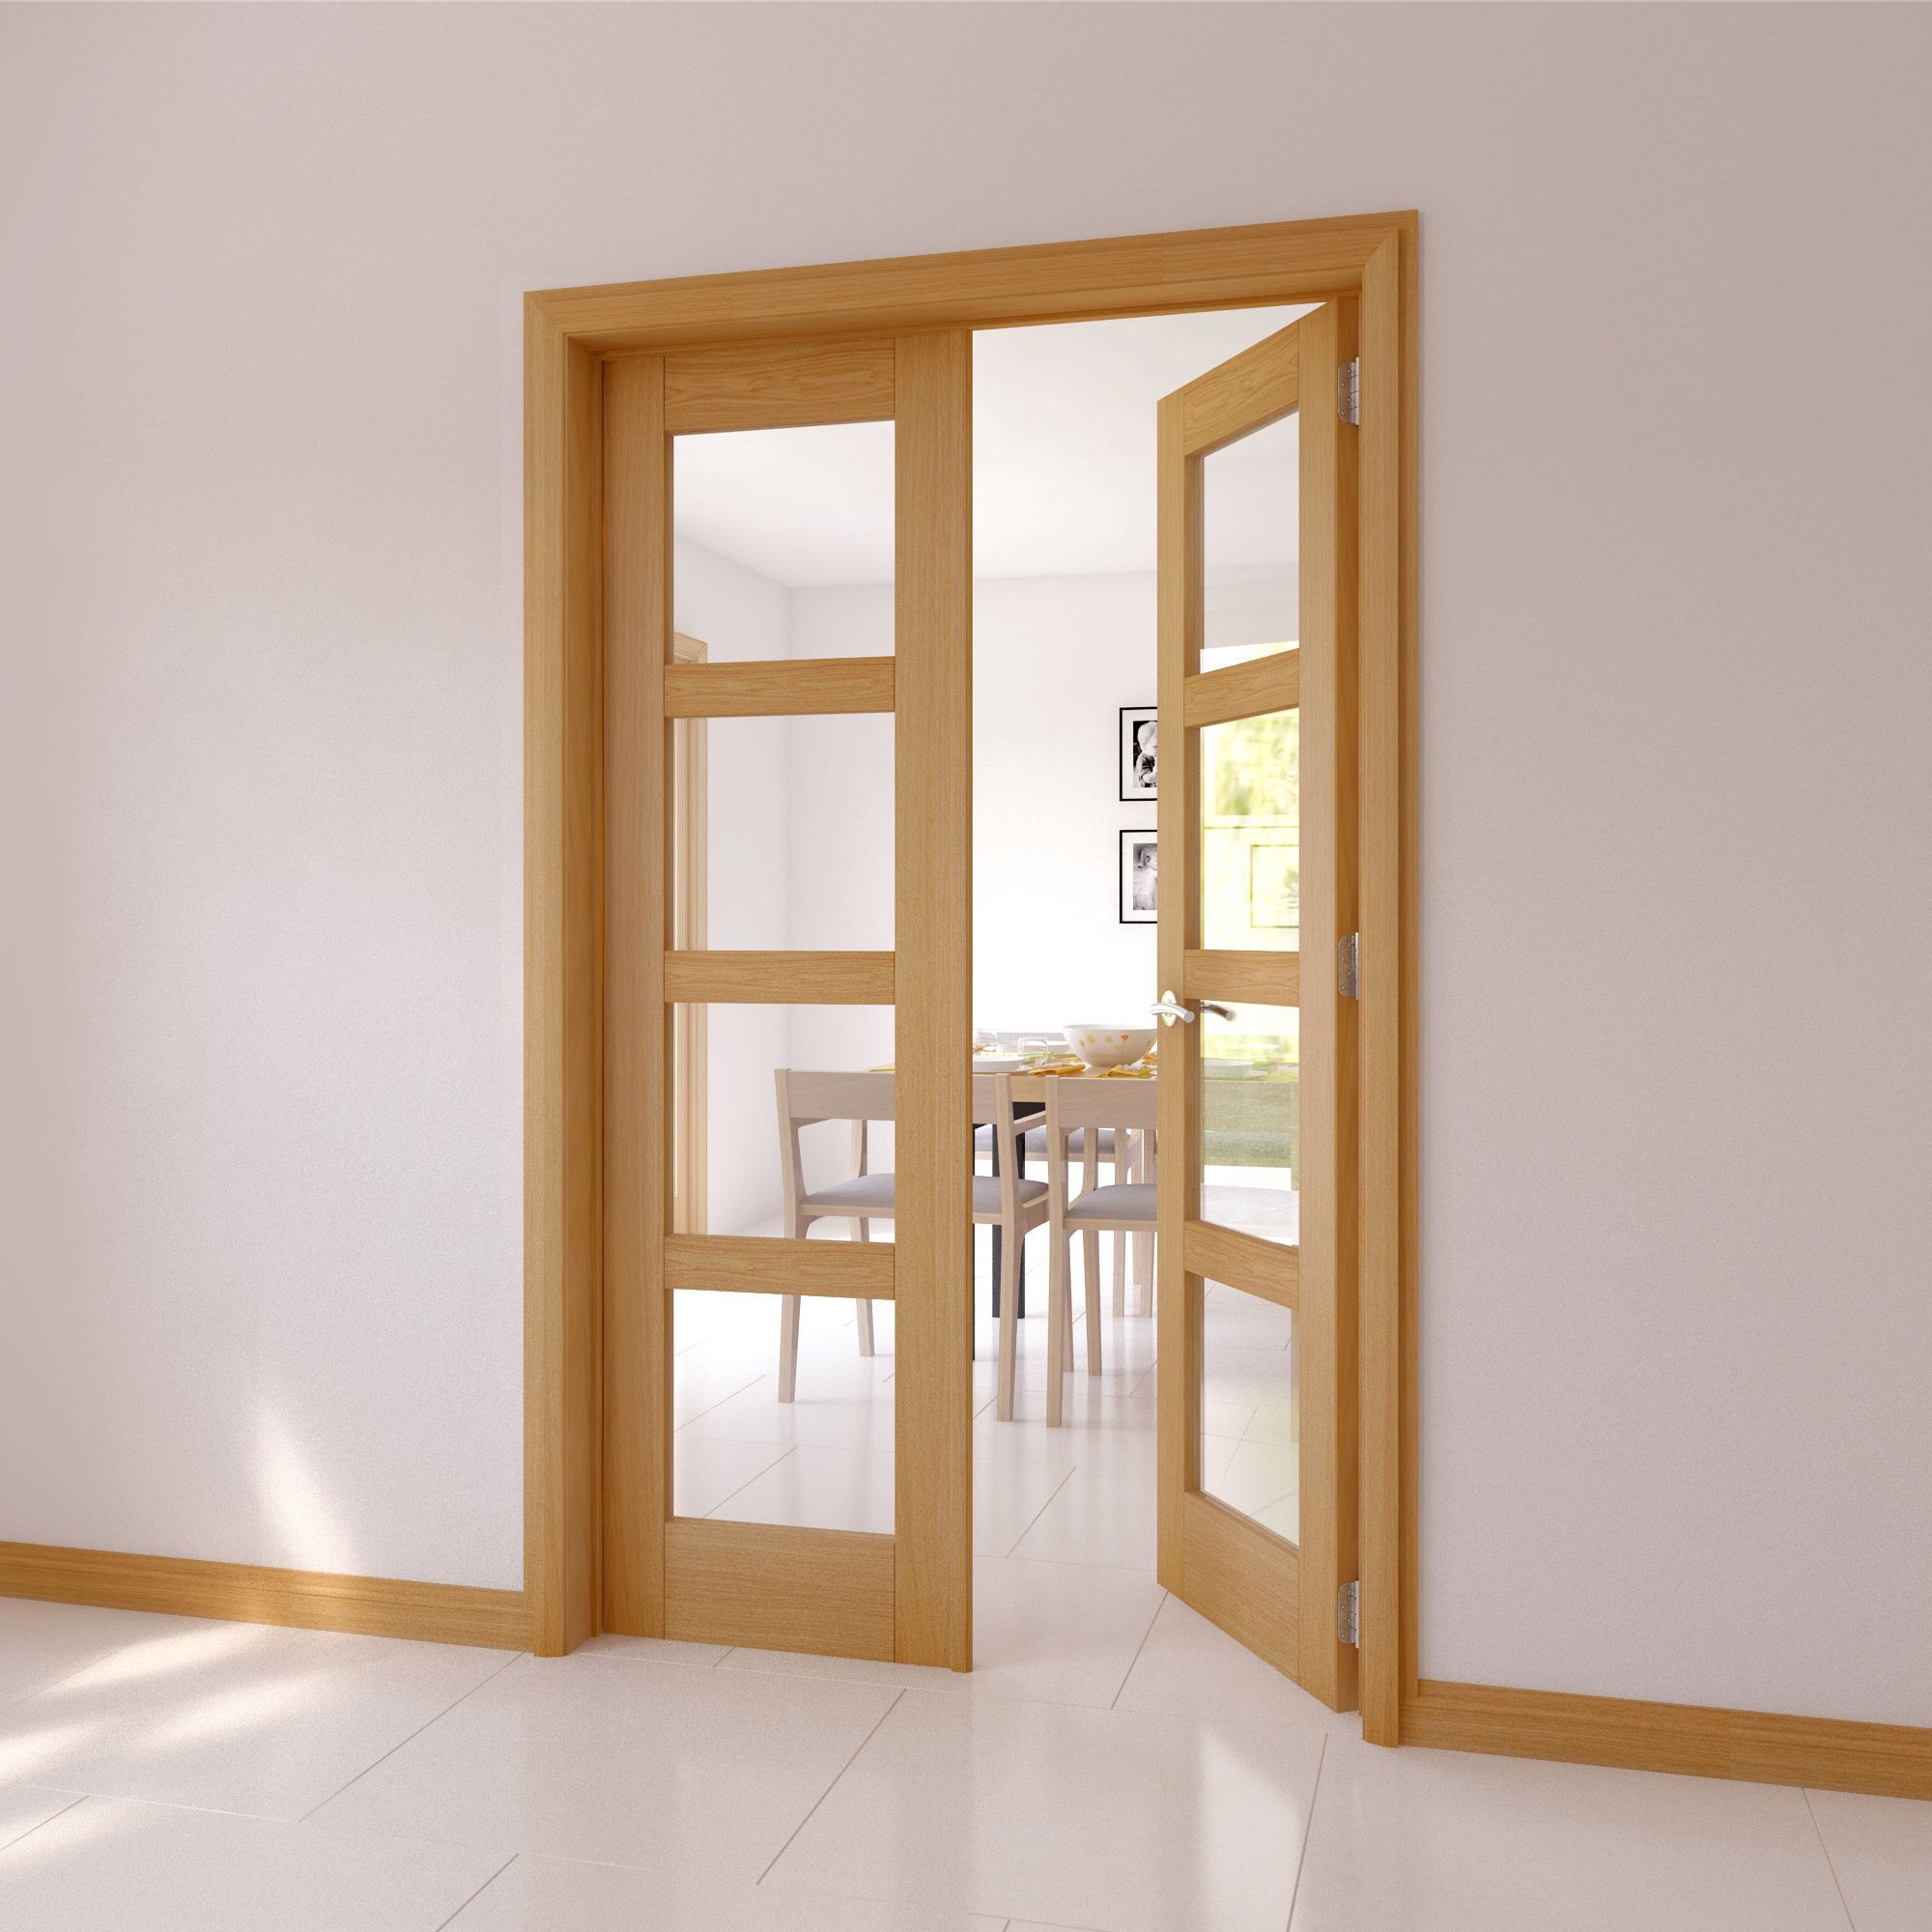 4 Panel 4 Lite Glazed Shaker Oak Veneer Internal French Door Set H 2030mm W 1230mm Departments Diy At B Q